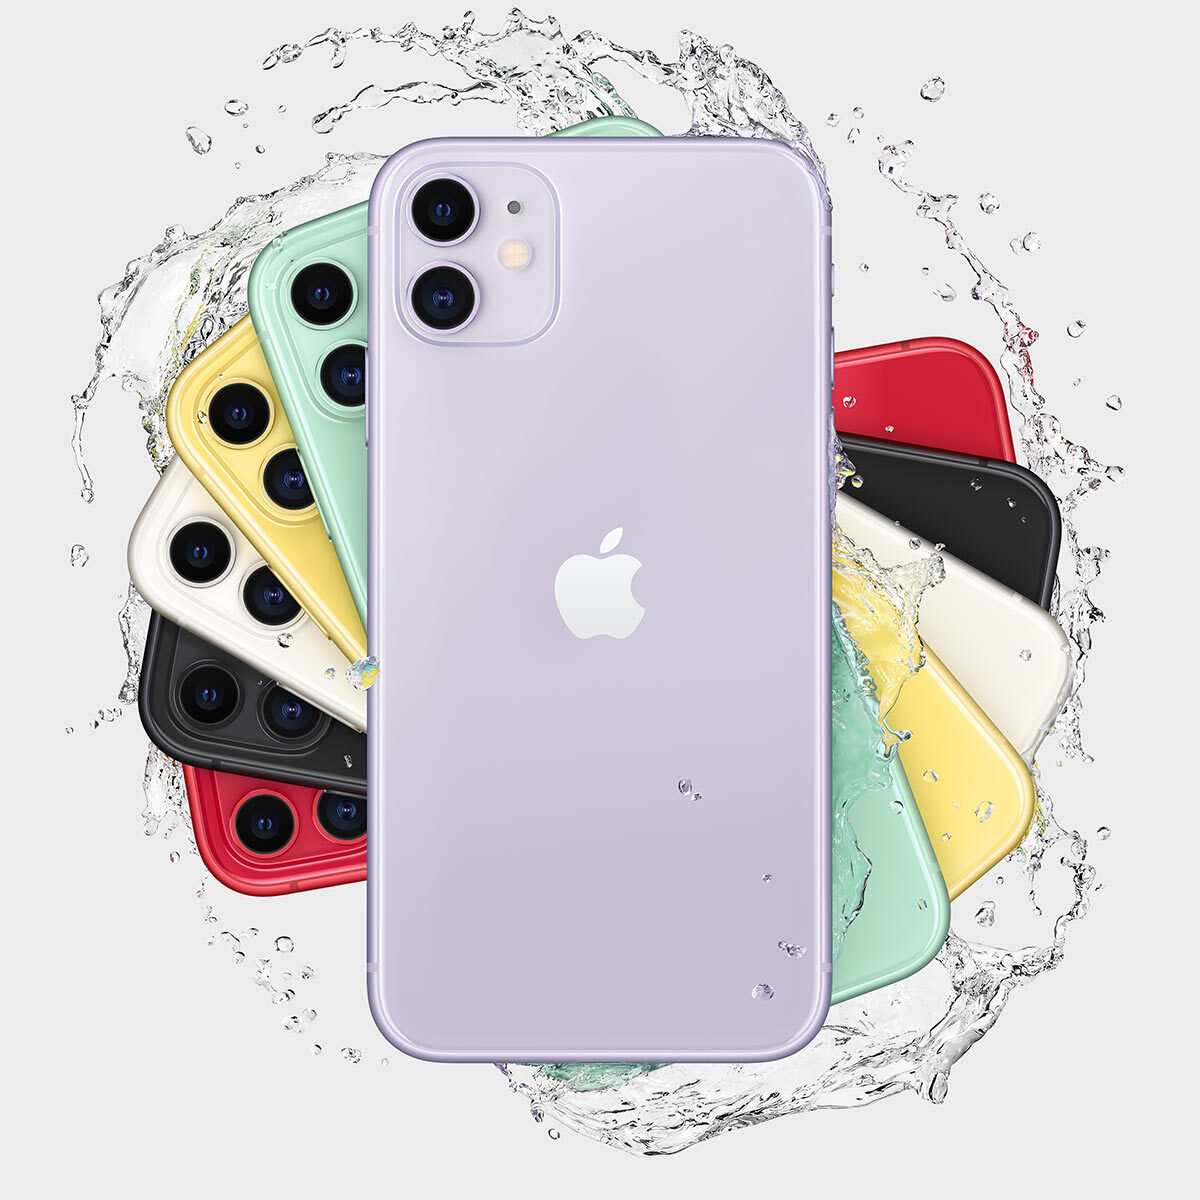 Buy Apple iPhone 11 128GB Sim Free Mobile Phone in Purple, MHDM3B/A at costco.co.uk